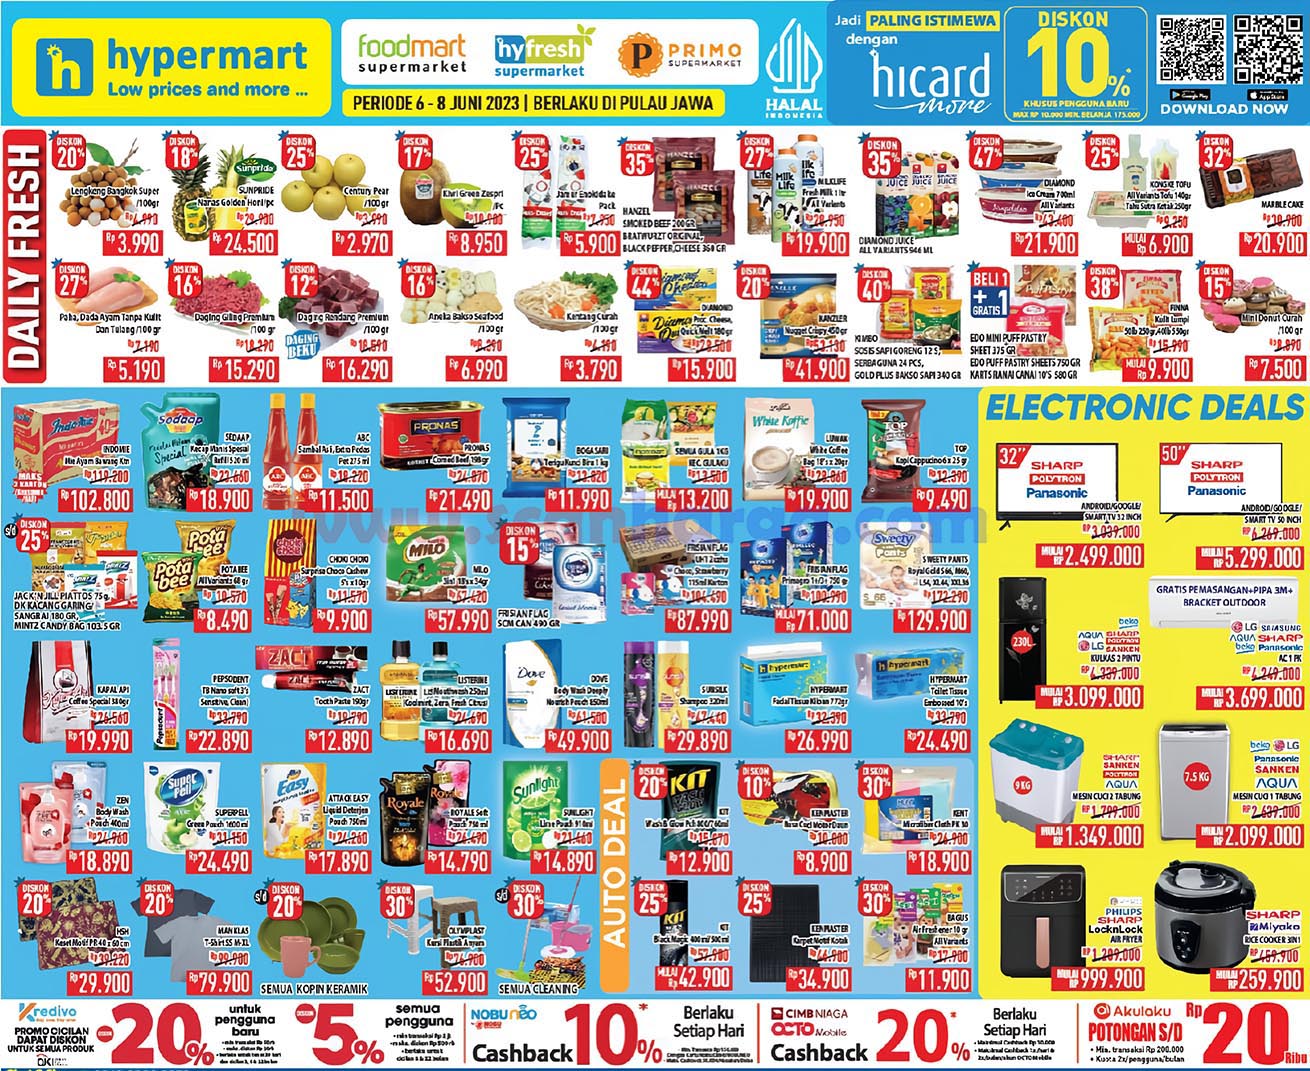 Promo Hypermart Weekday 6 - 8 Juni 2023 2